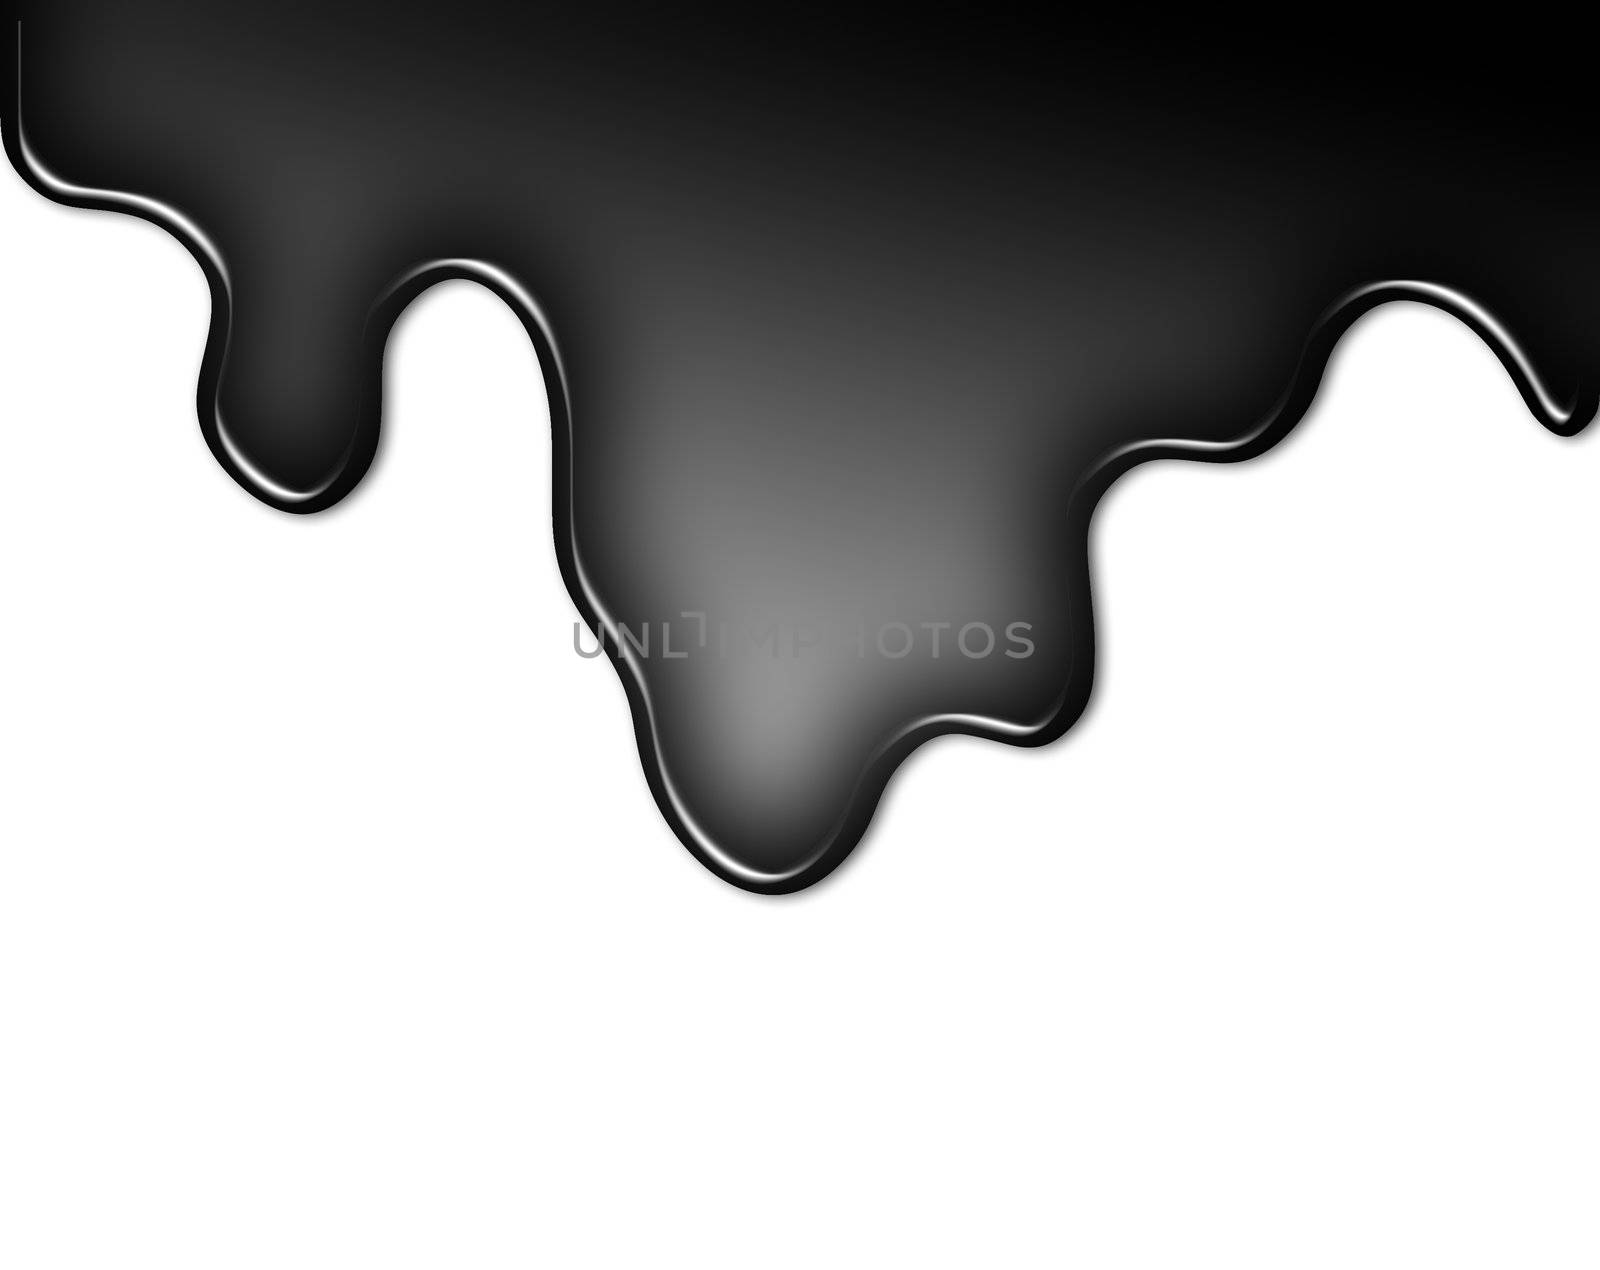 Black liquid or oil by carloscastilla